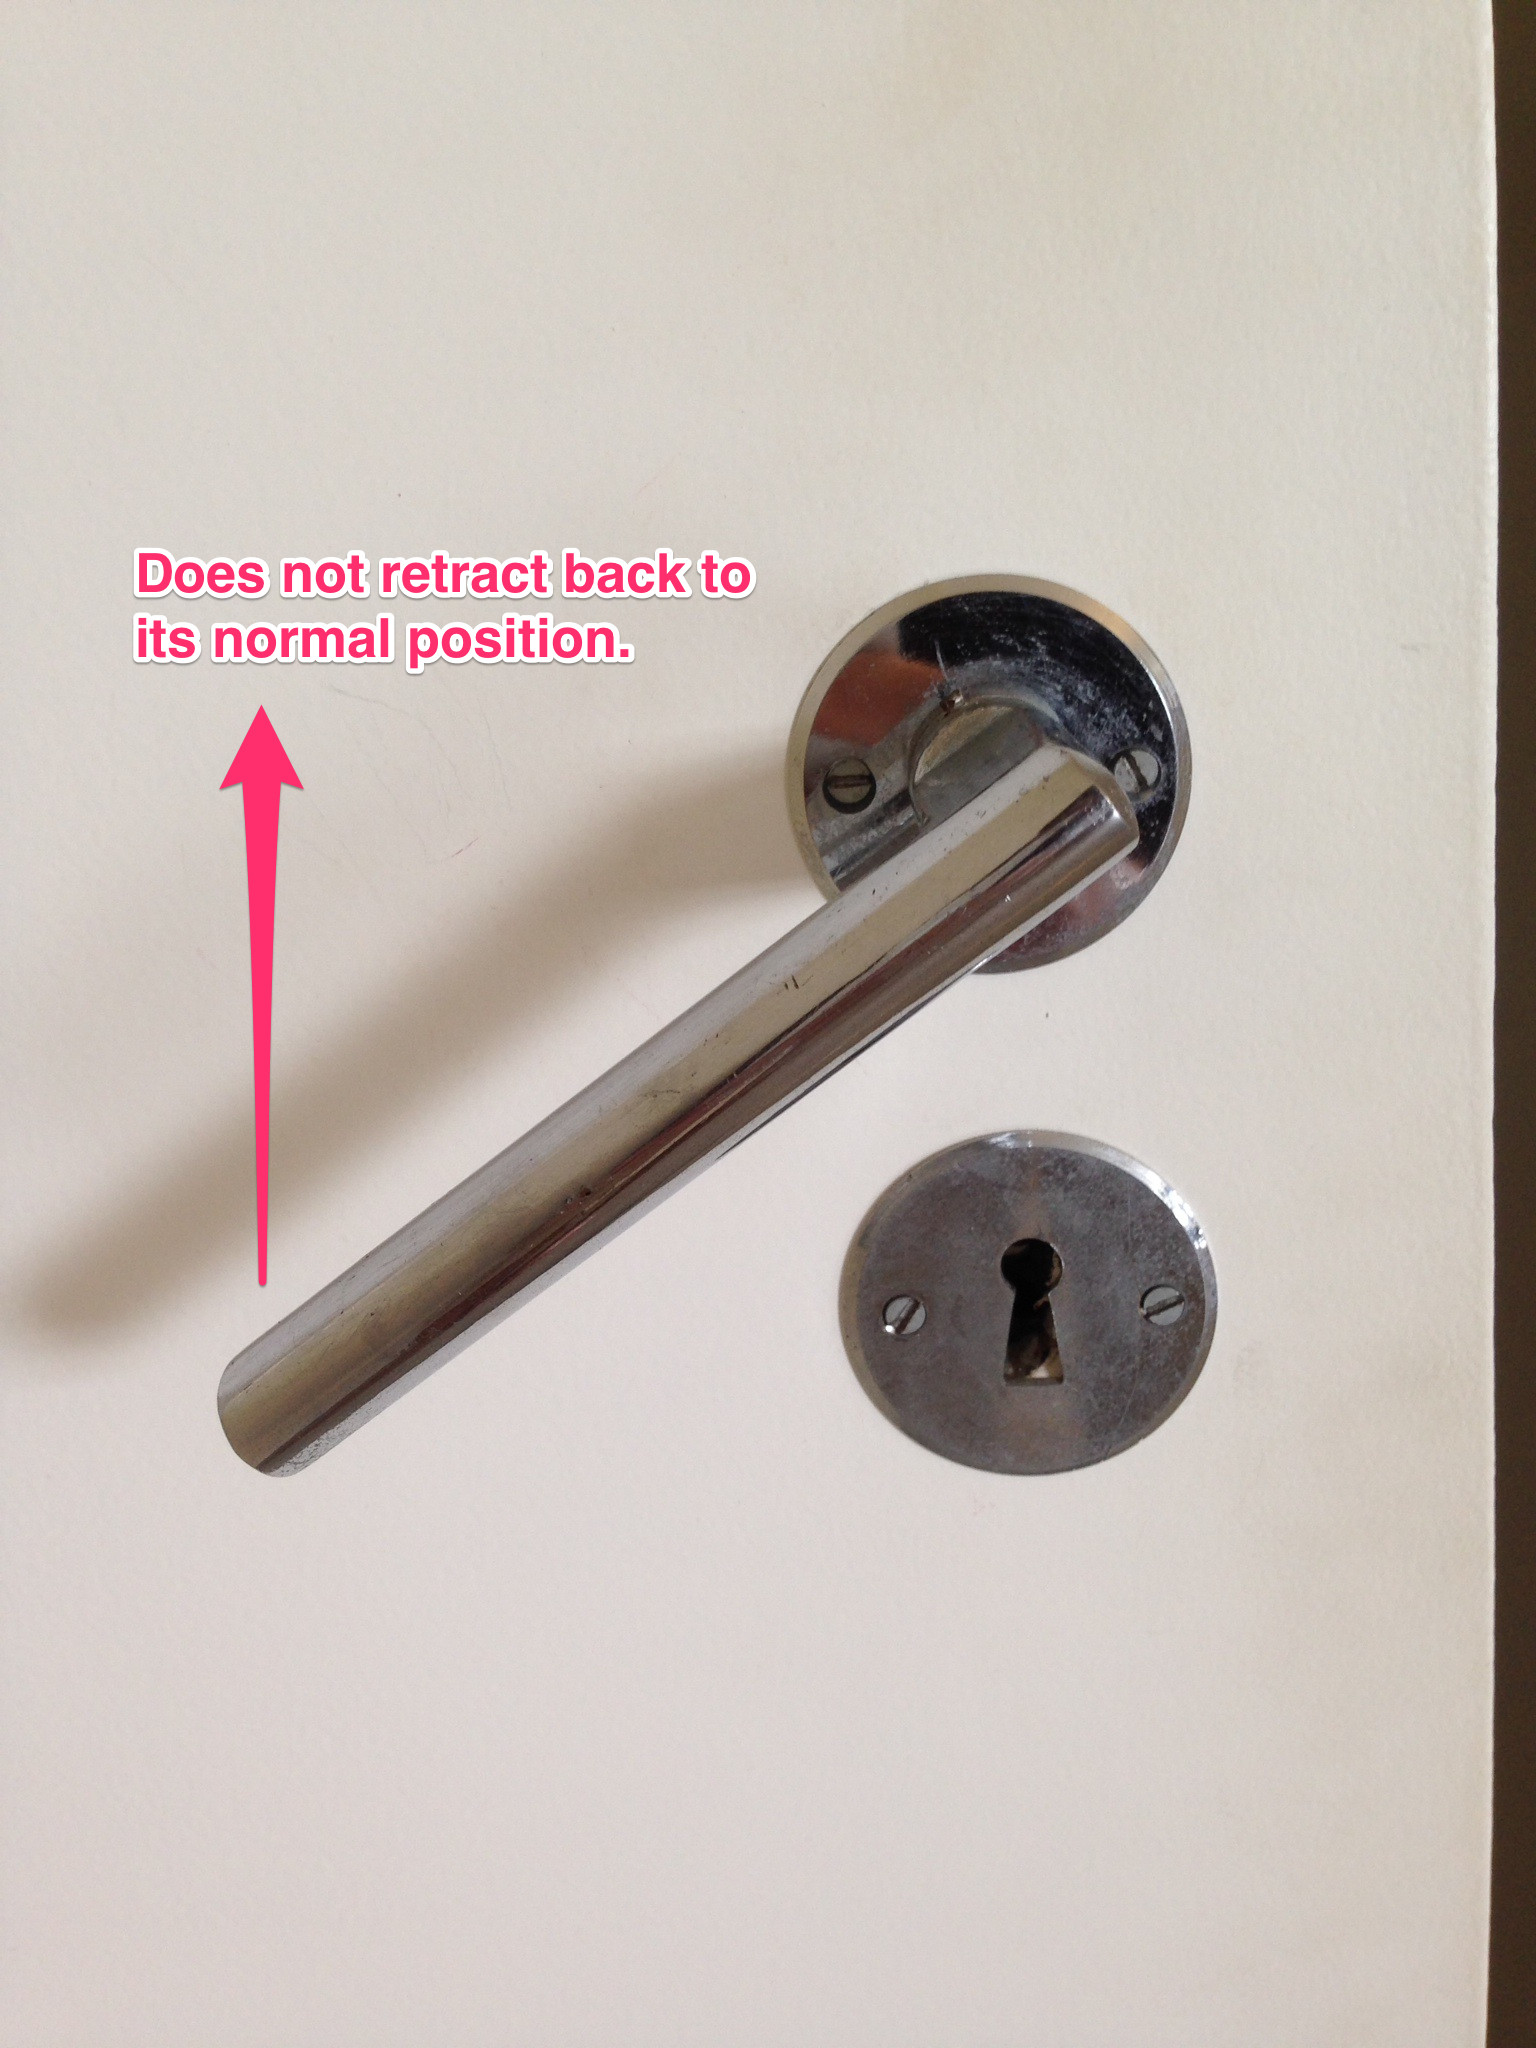 unlock door knob without key photo - 5